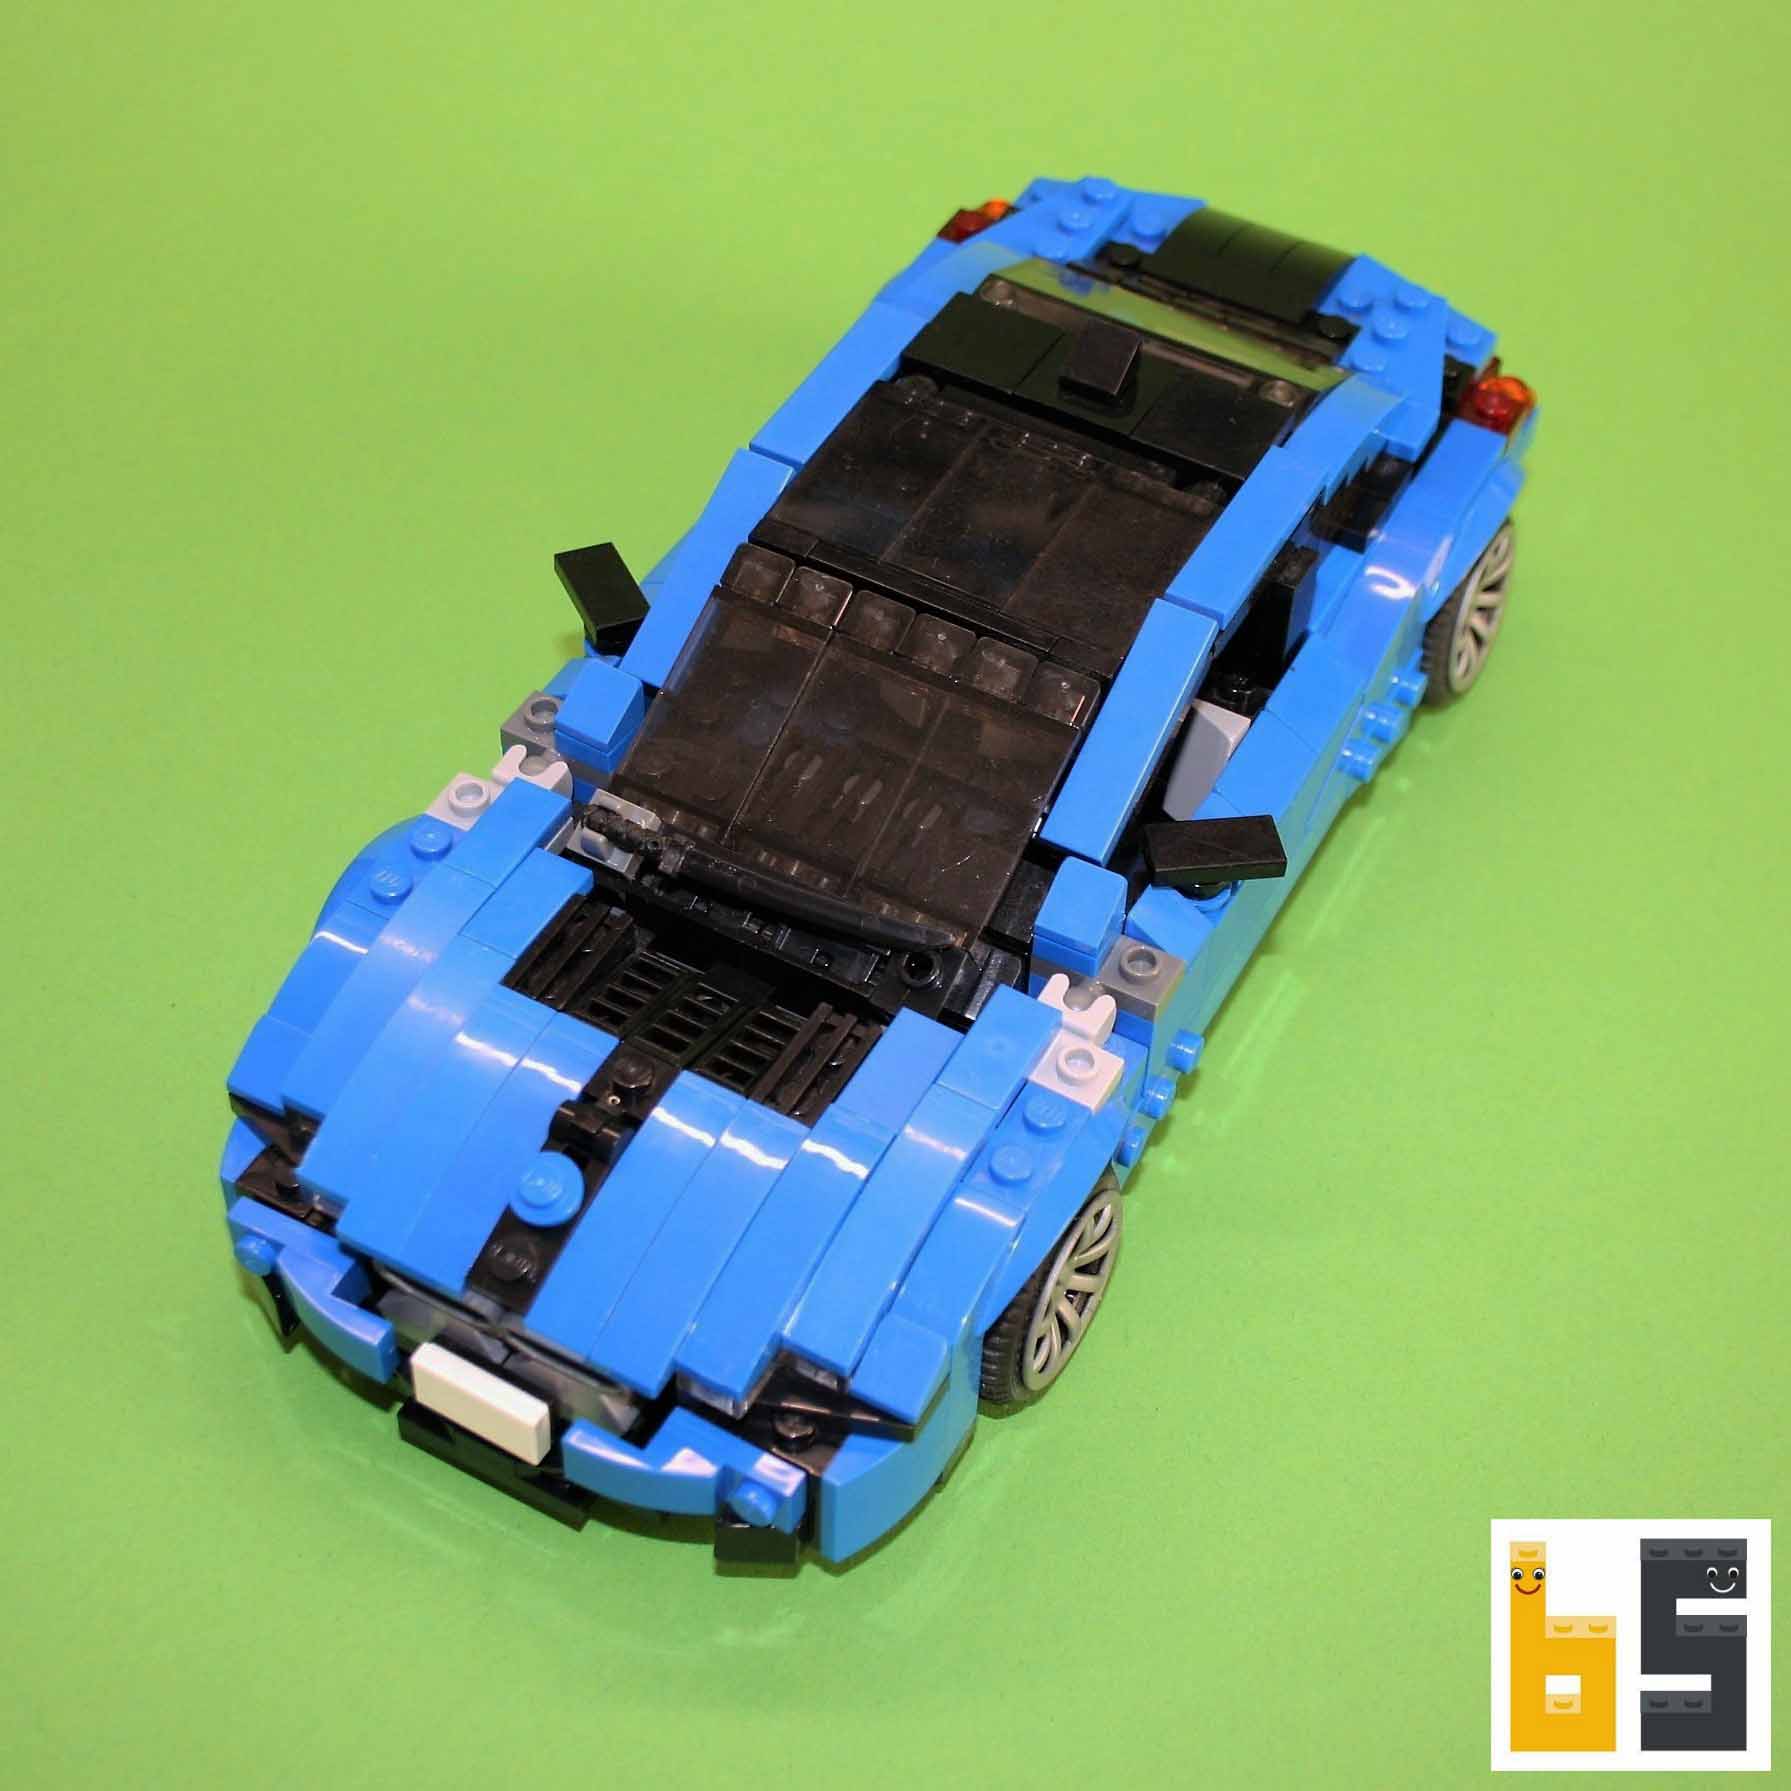 BMW i8 Hybrid Coupé – kit from LEGO® bricks – The Brickworms